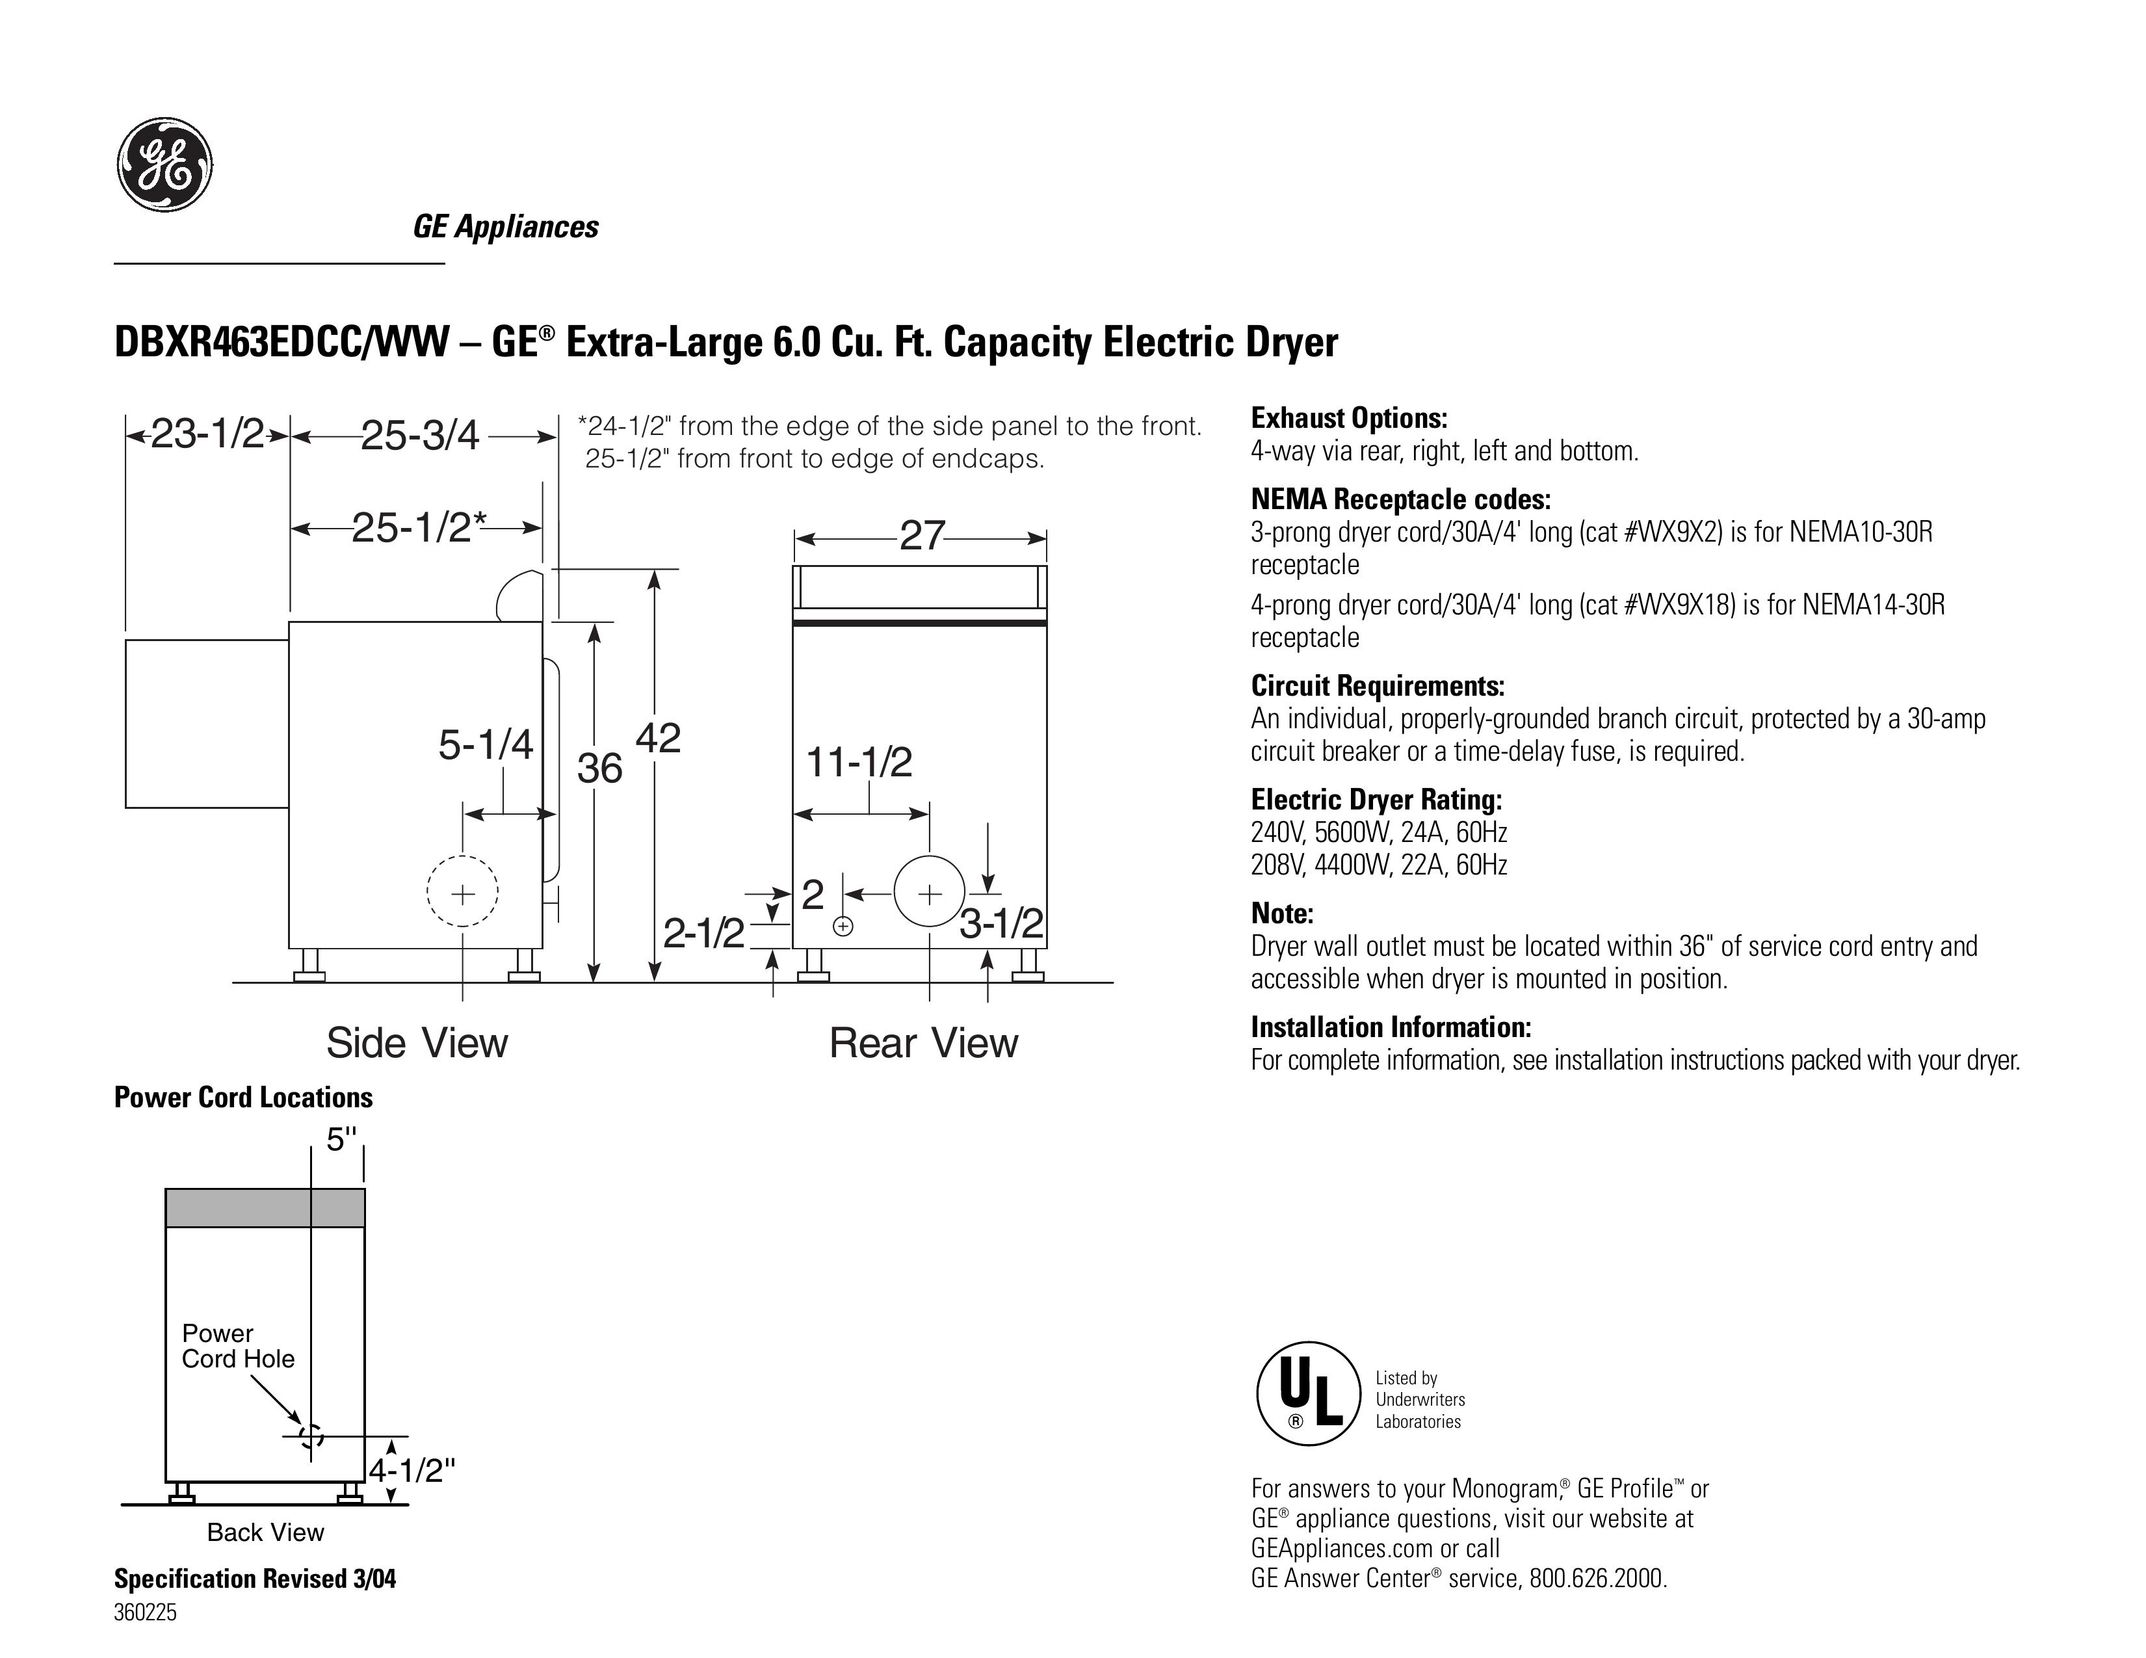 GE DBXR463EDCC/WW Car Stereo System User Manual